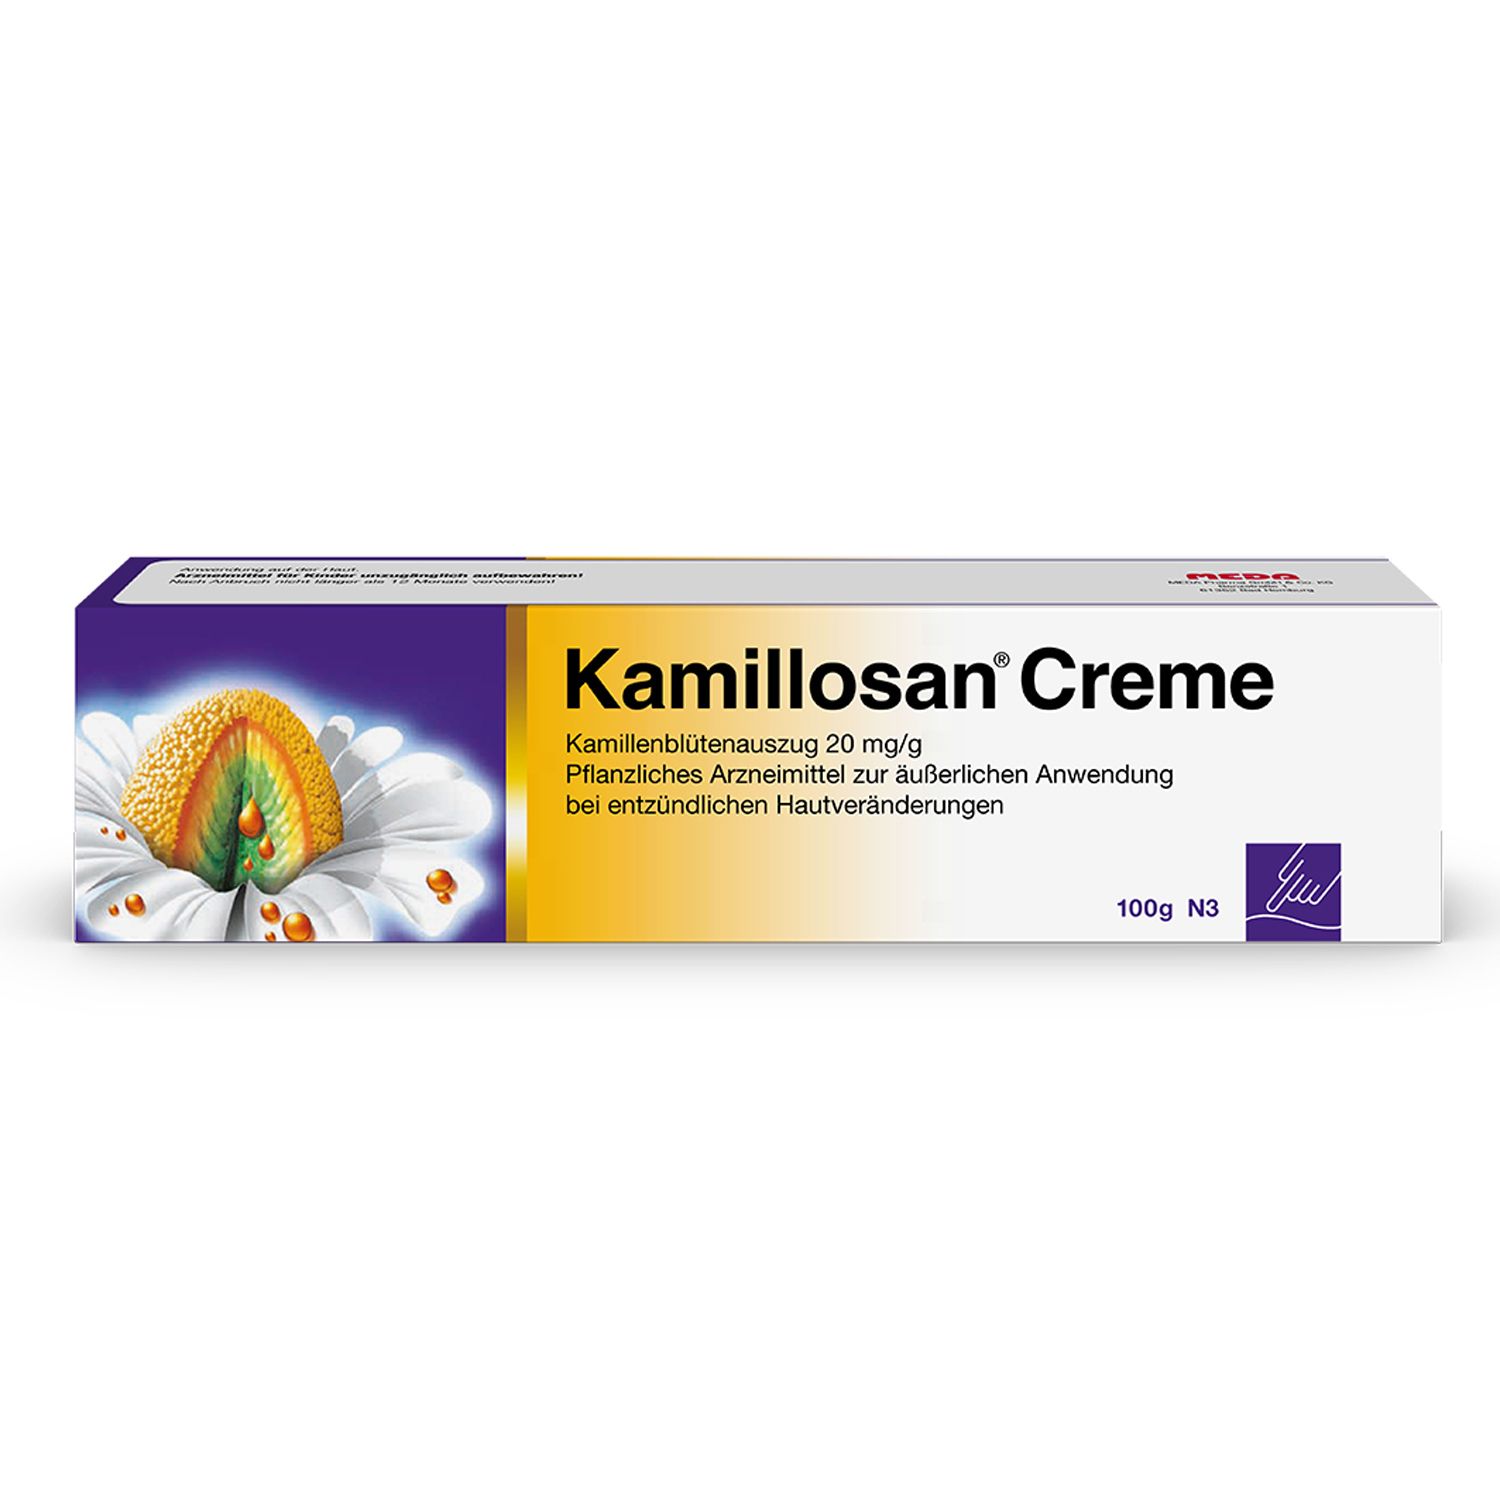 Kamillosan® Creme